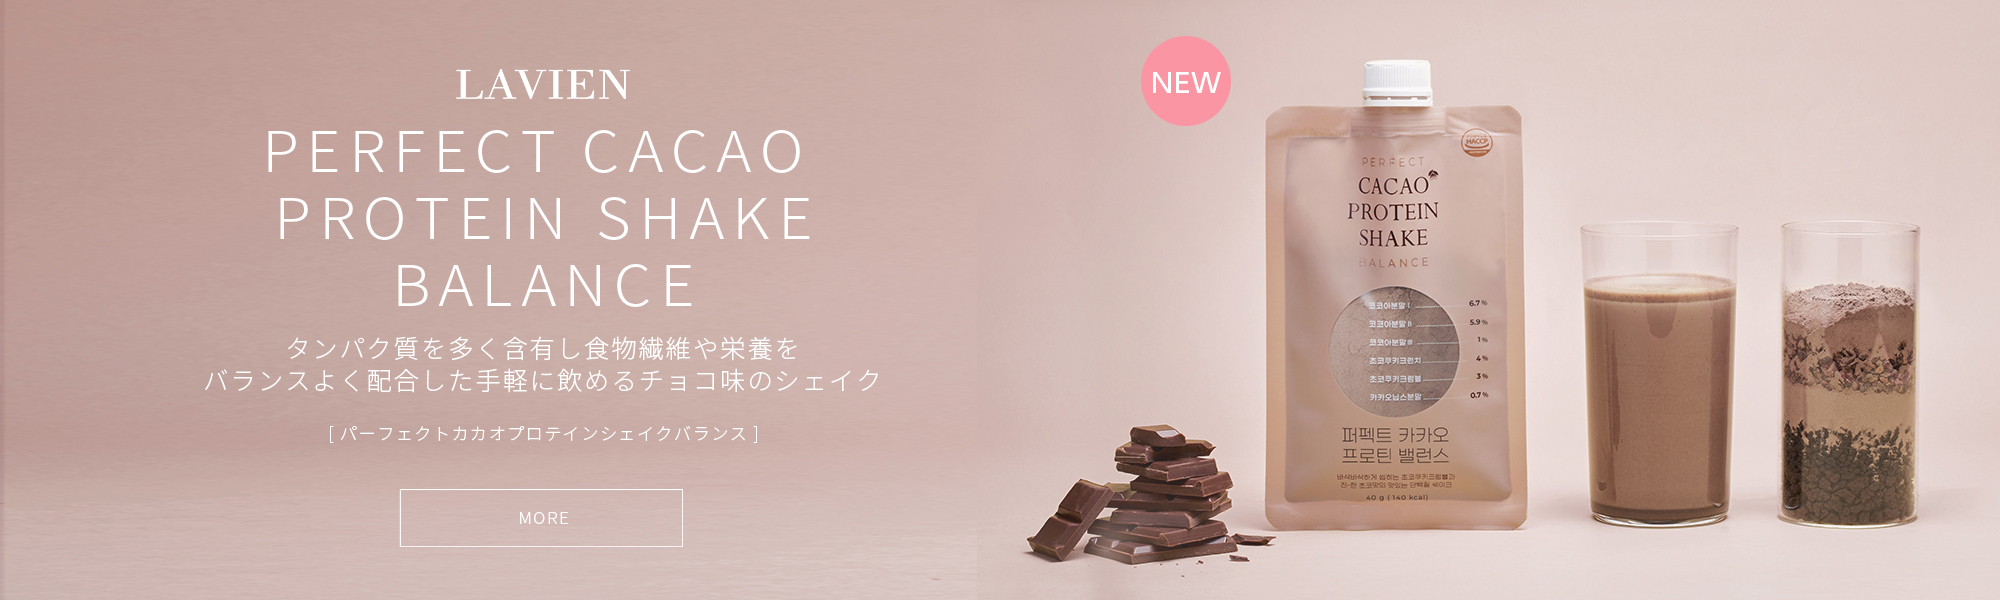 perfect_cacao_proteinshake_balance_new_slidpc_fs.jpg